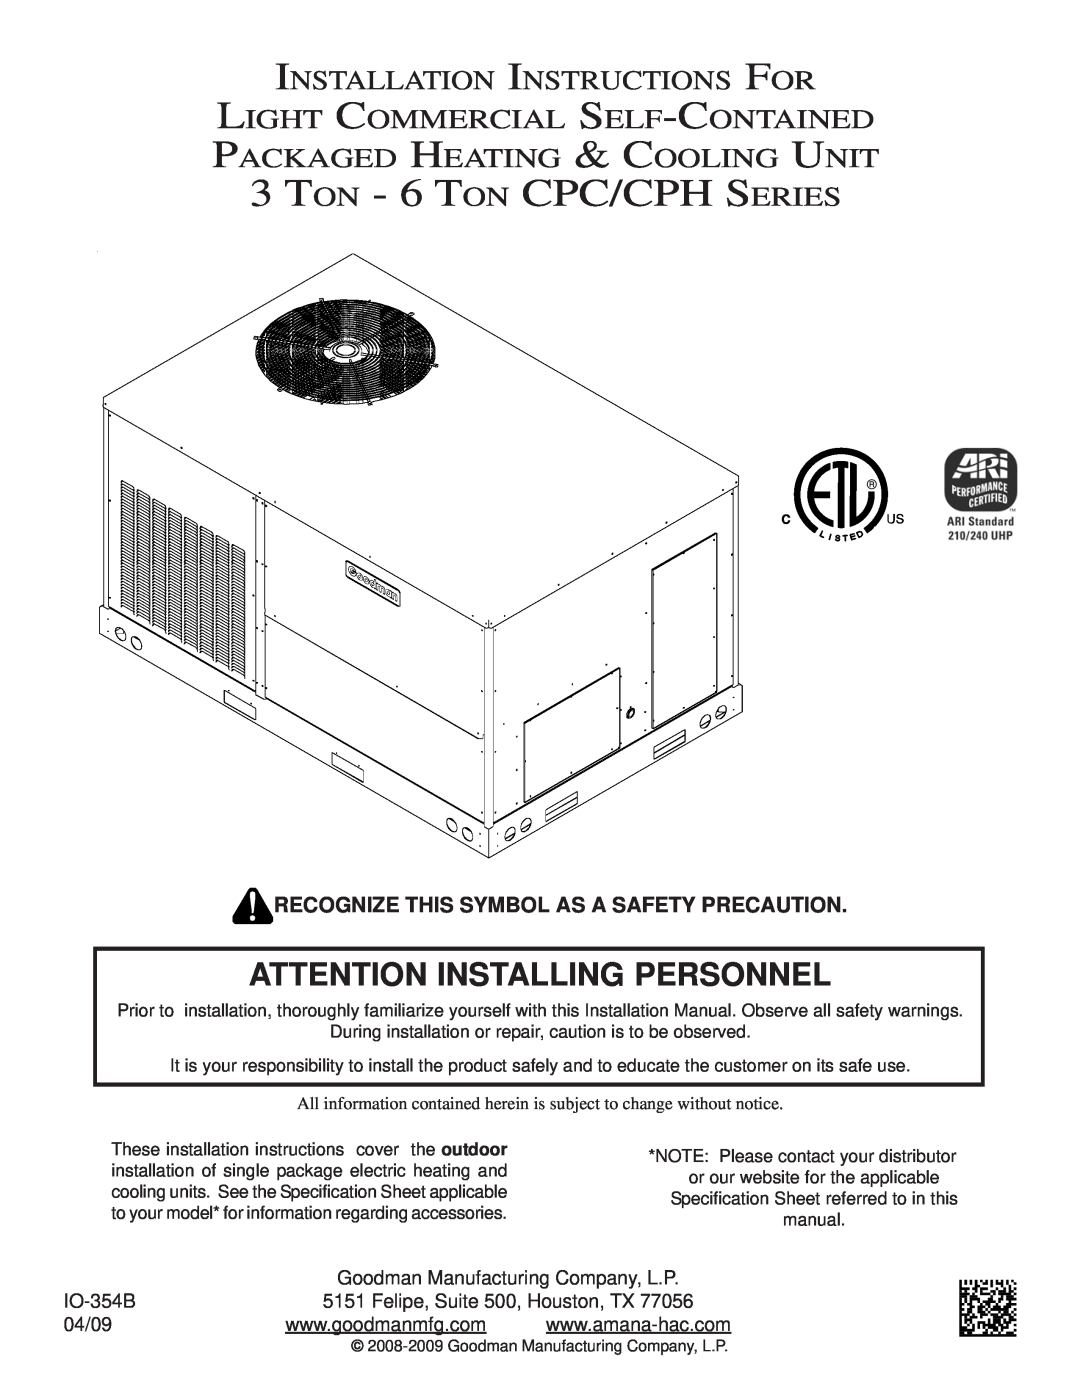 Goodman Mfg IO-354B installation instructions TON - 6 TON CPC/CPH SERIES, Attention Installing Personnel, 04/09 